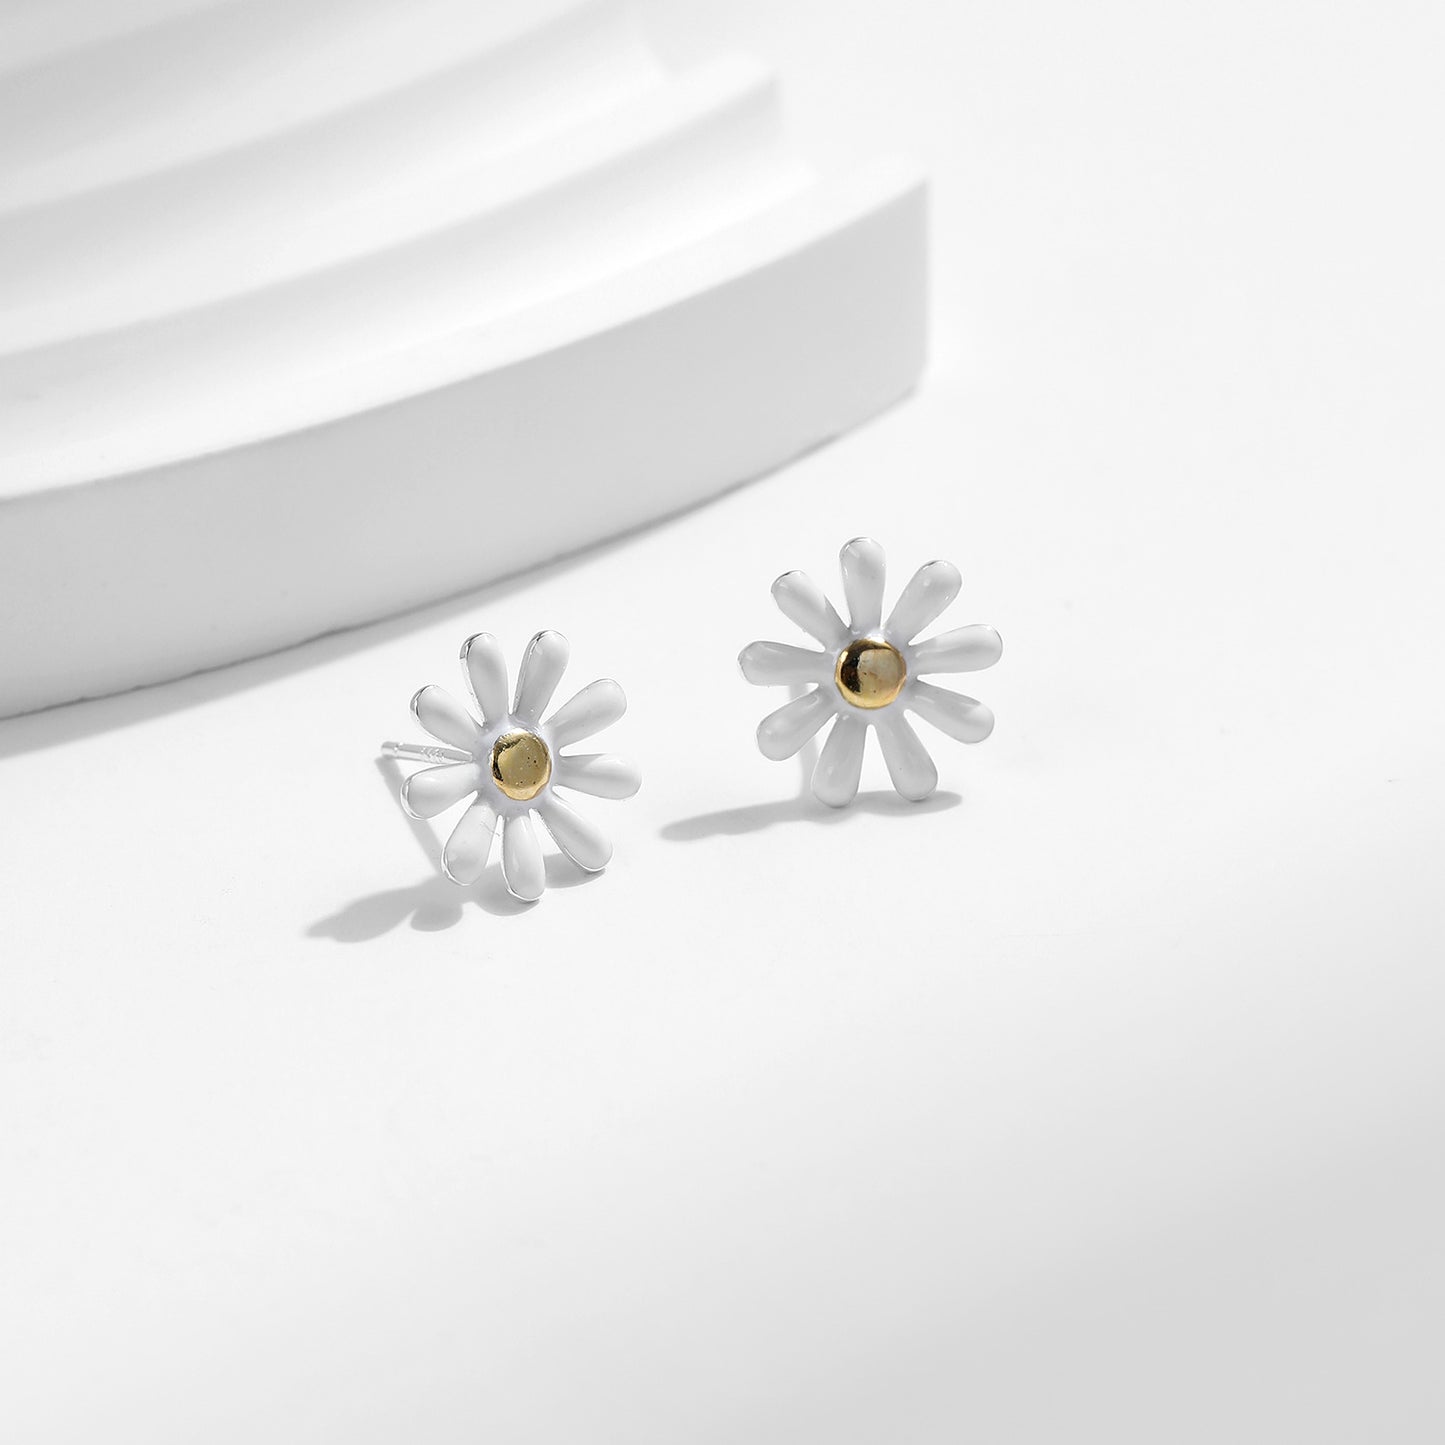 S925 Silver Small Flower Earrings With Sweet Korean Daisy Design